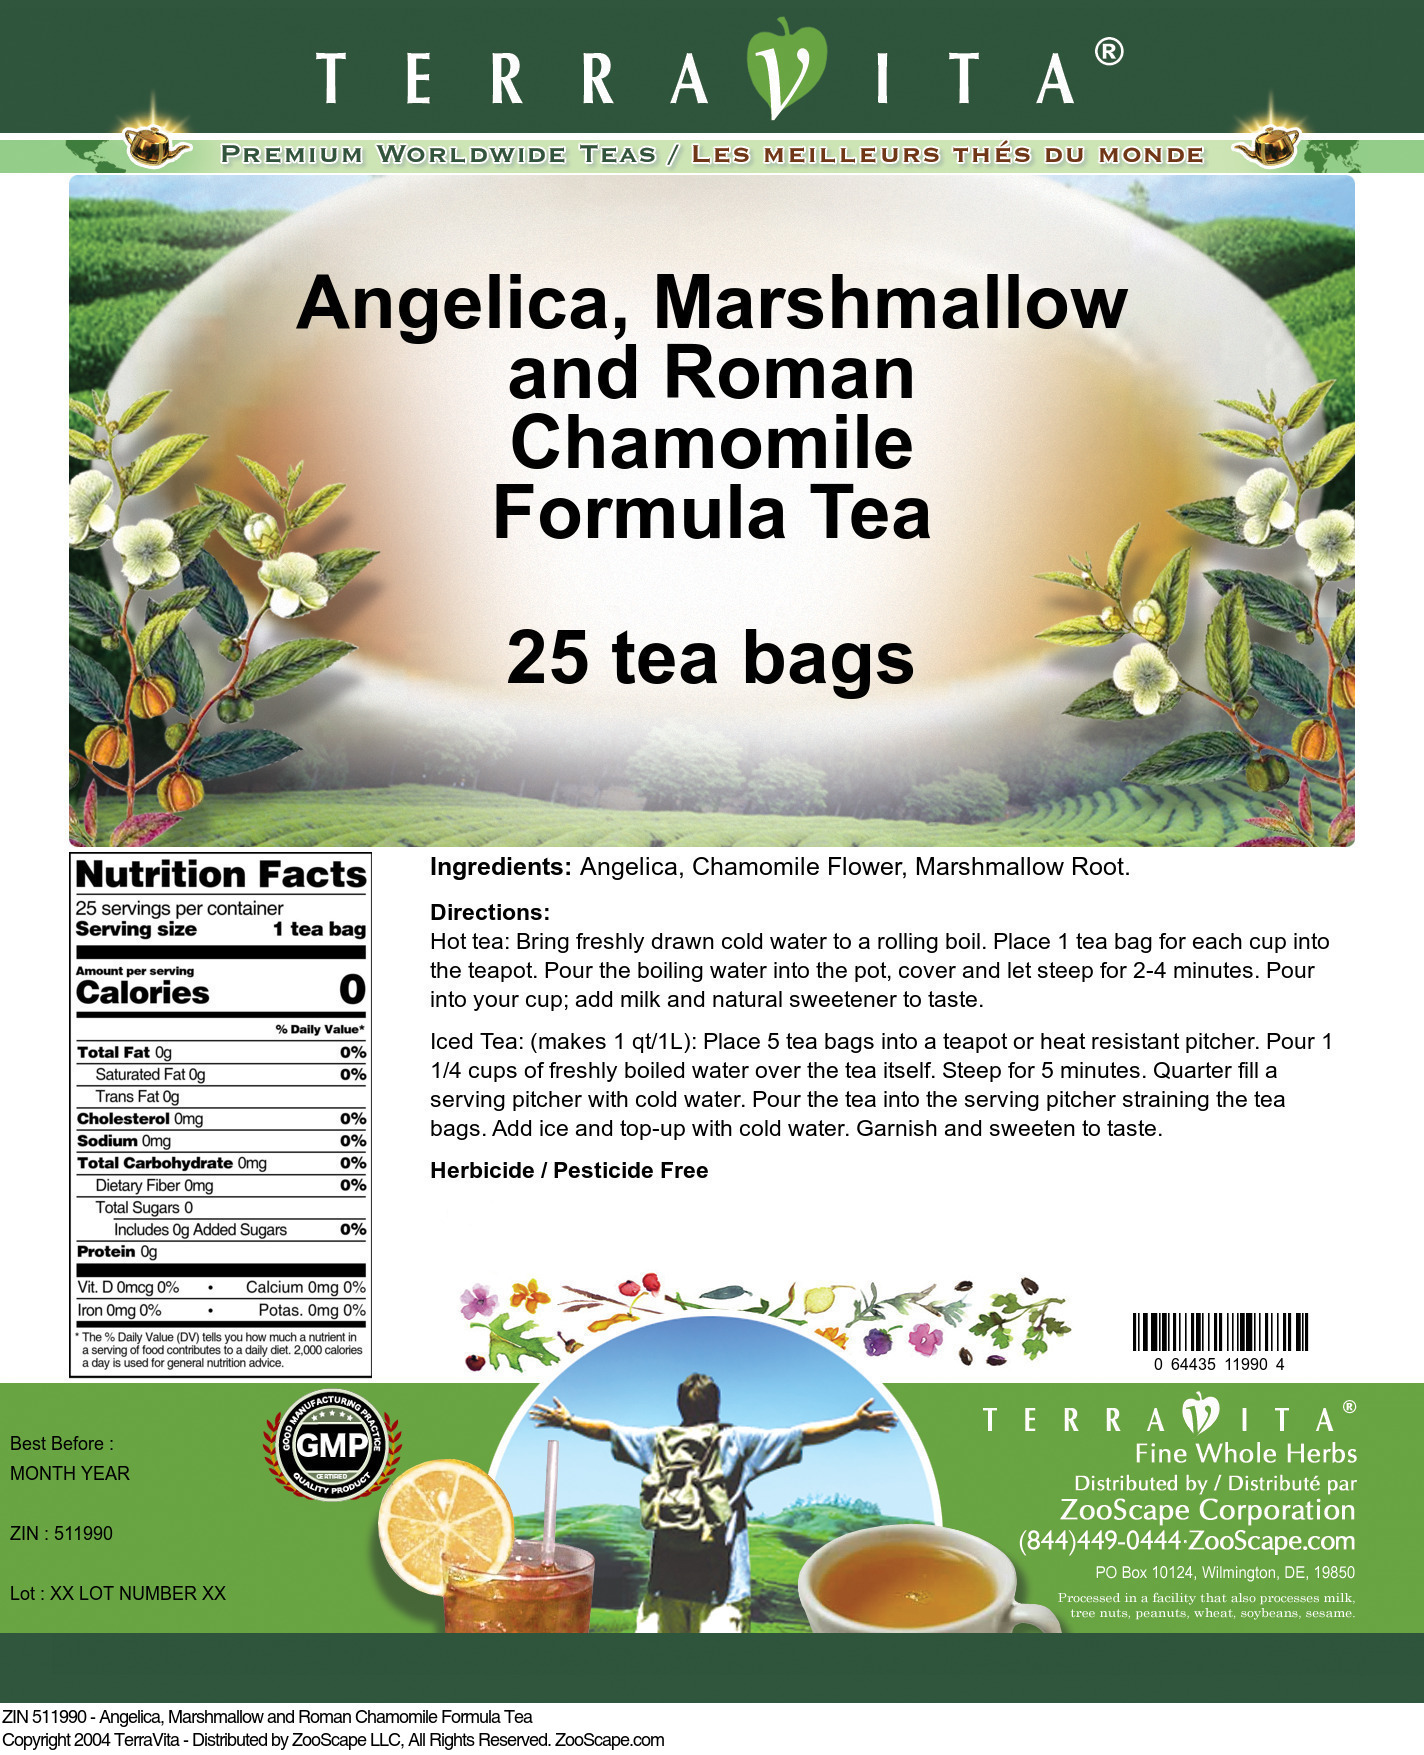 Angelica, Marshmallow and Roman Chamomile Formula Tea - Label